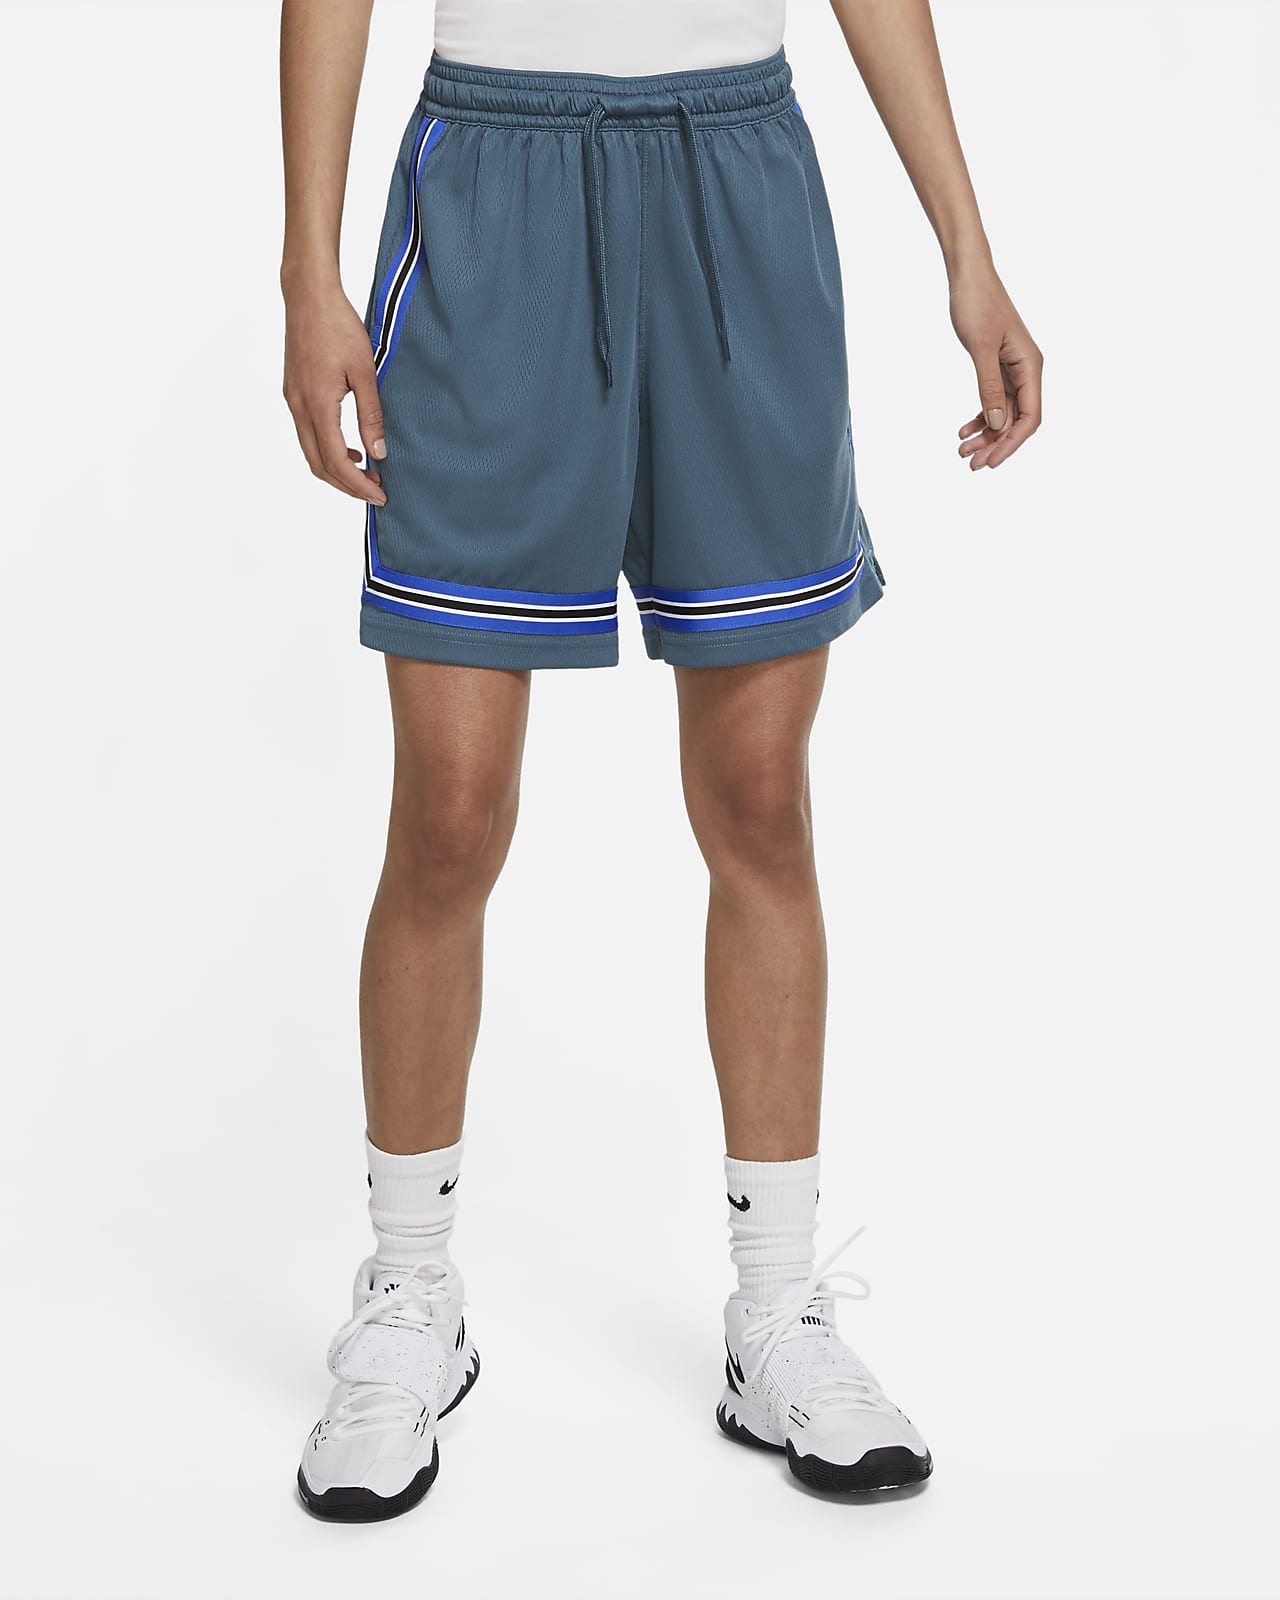 nike women's basketball shorts